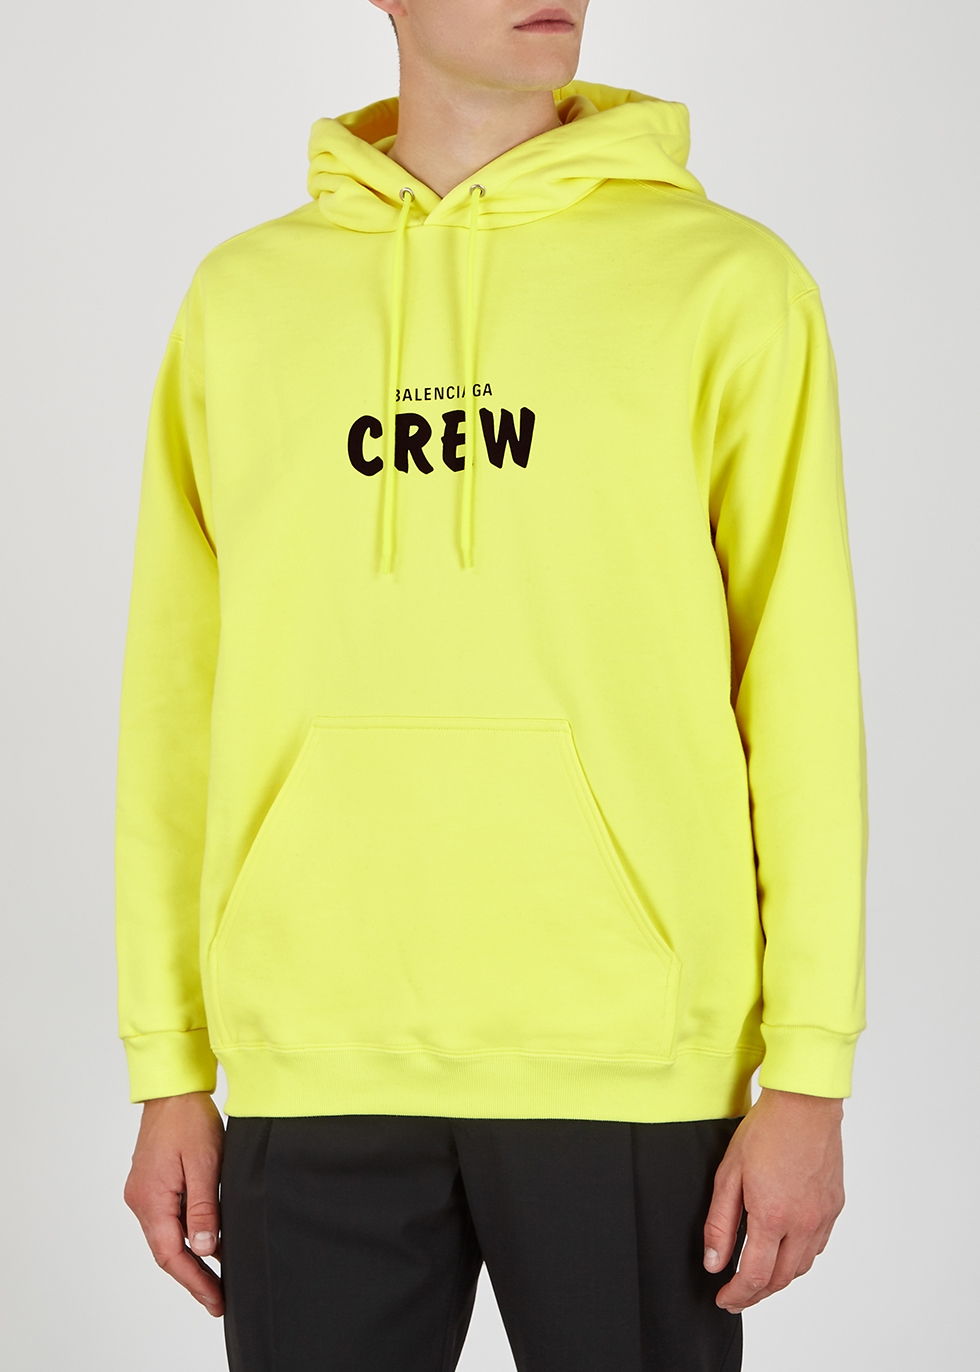 balenciaga hoodie yellow